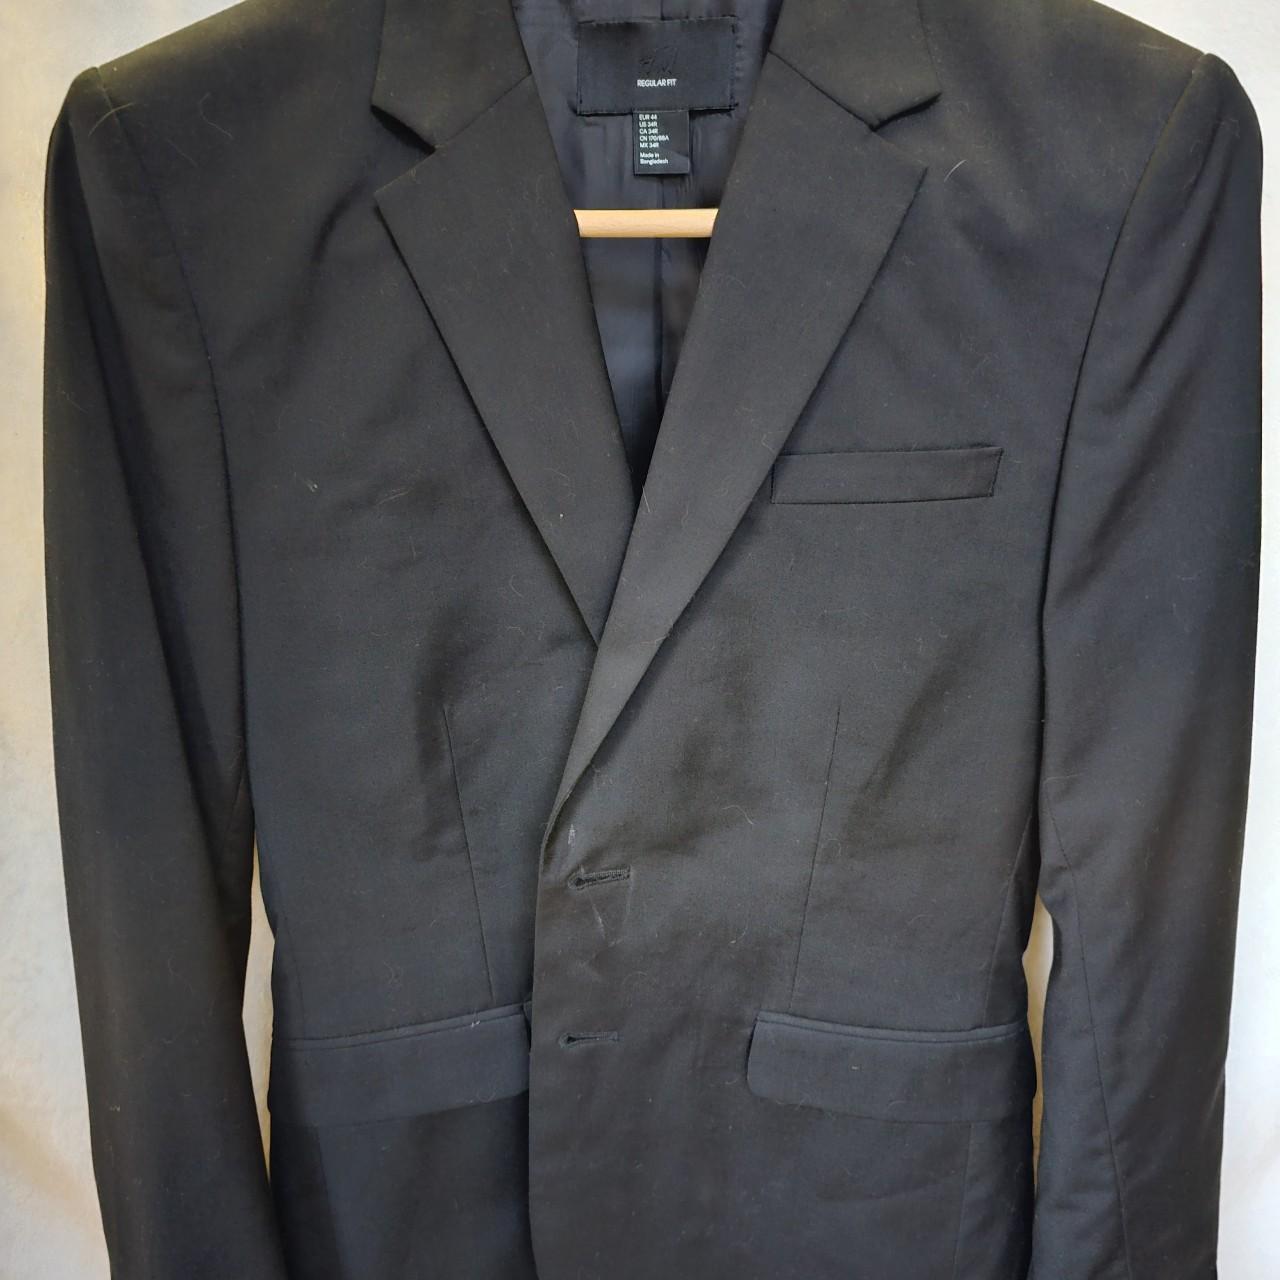 Small h&m suit jacket blazer #vintange #90s #80s... - Depop